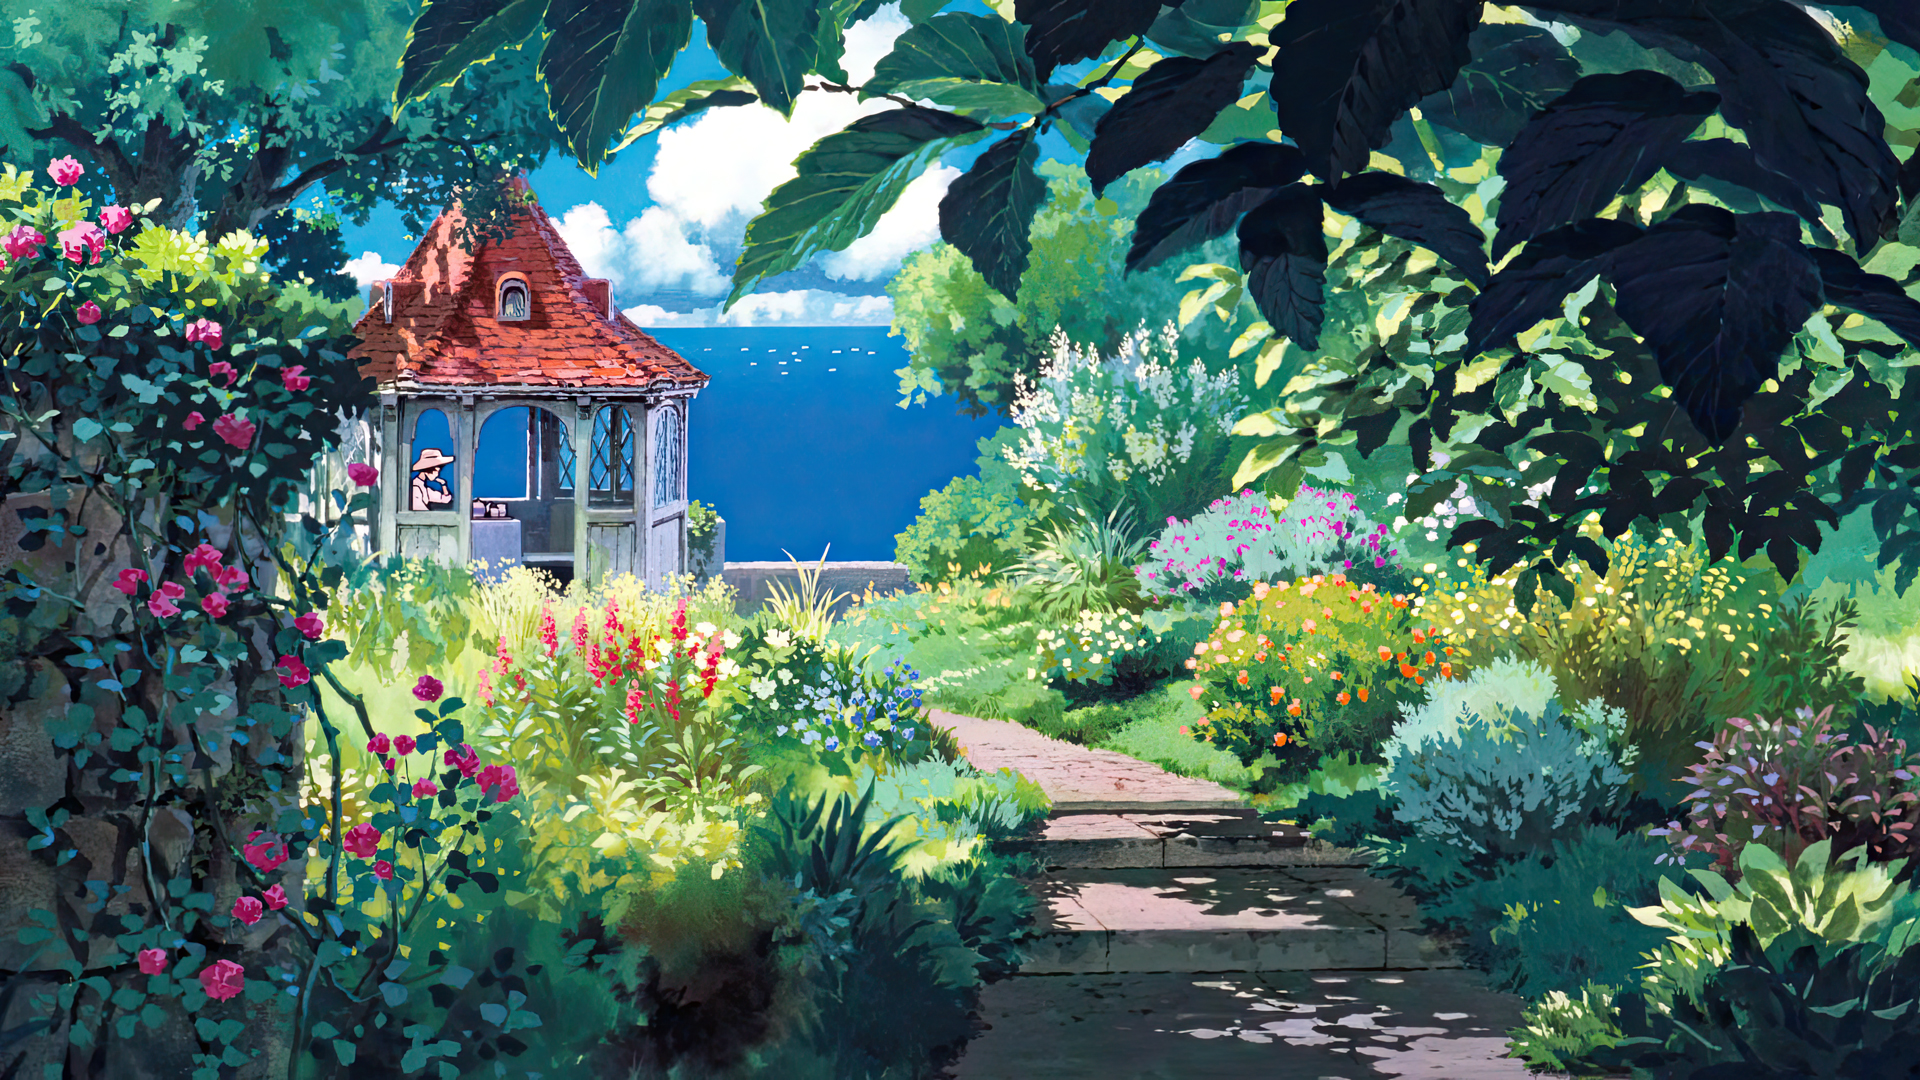 Anime 1920x1080 Porco Rosso Studio Ghibli animated movies film stills anime animation Hayao Miyazaki garden water sky clouds flowers leaves gazebo dappled sunlight